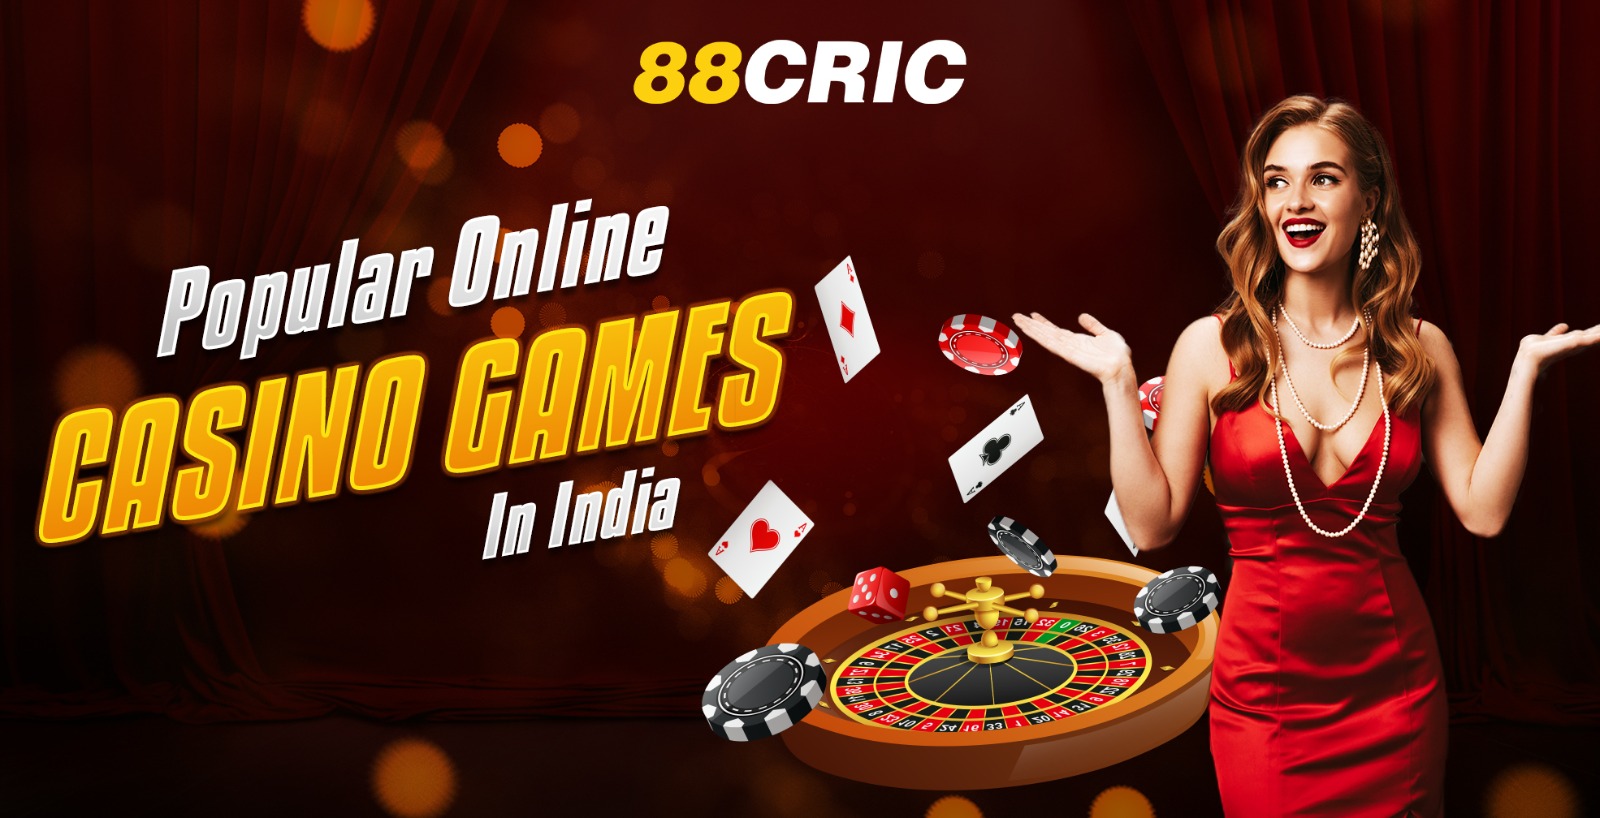 Popular online casino games-88cric blog